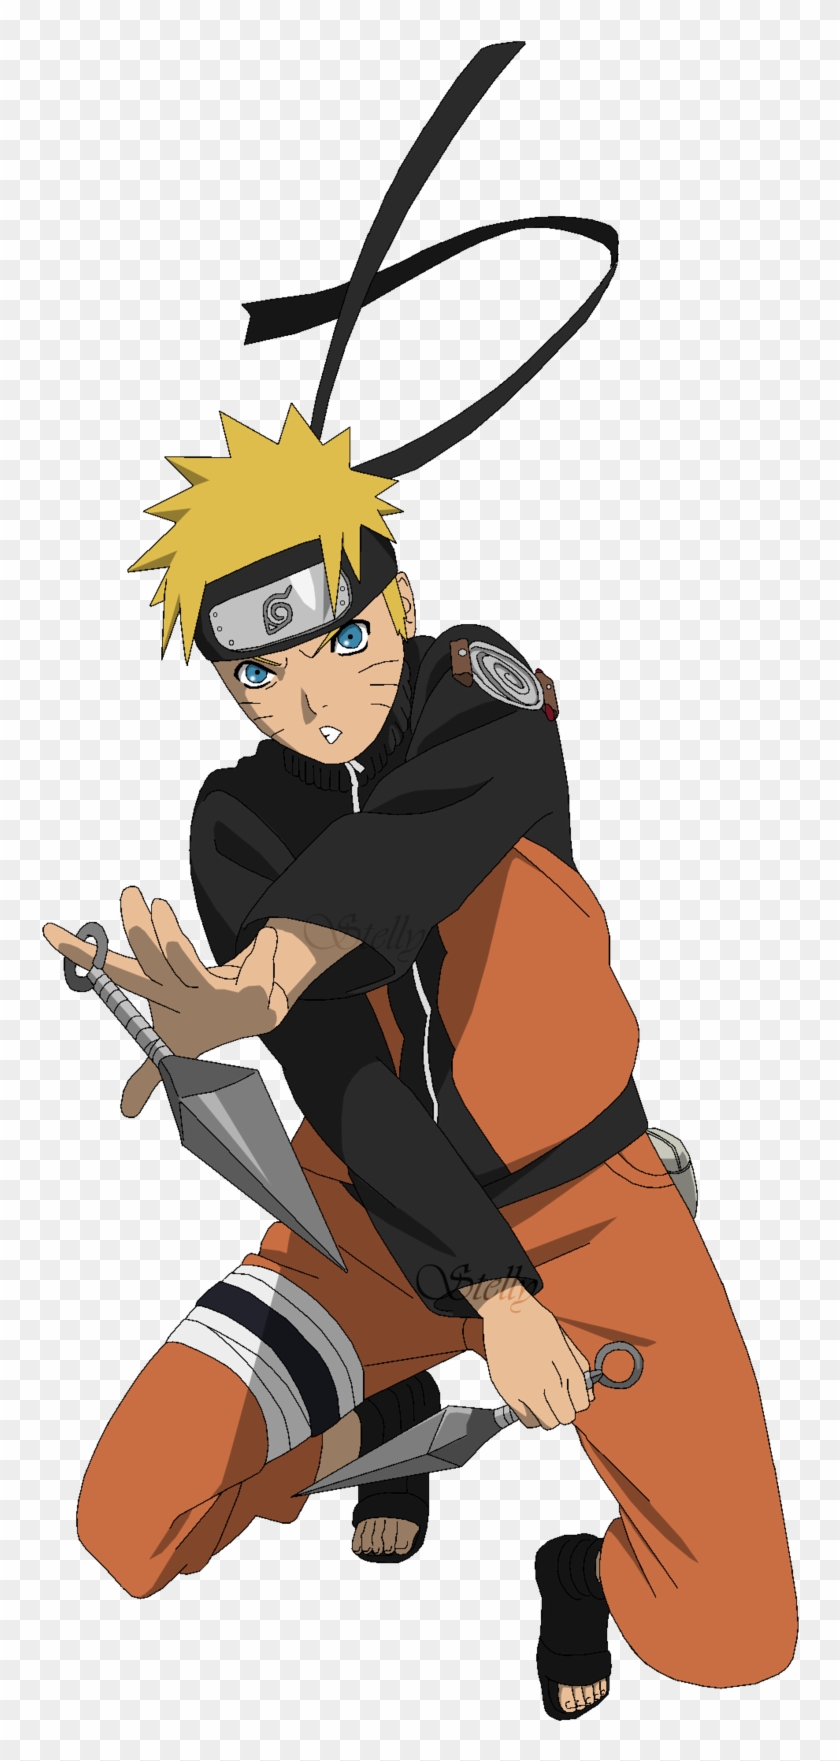 Gambar Naruto No Background gambar ke 9